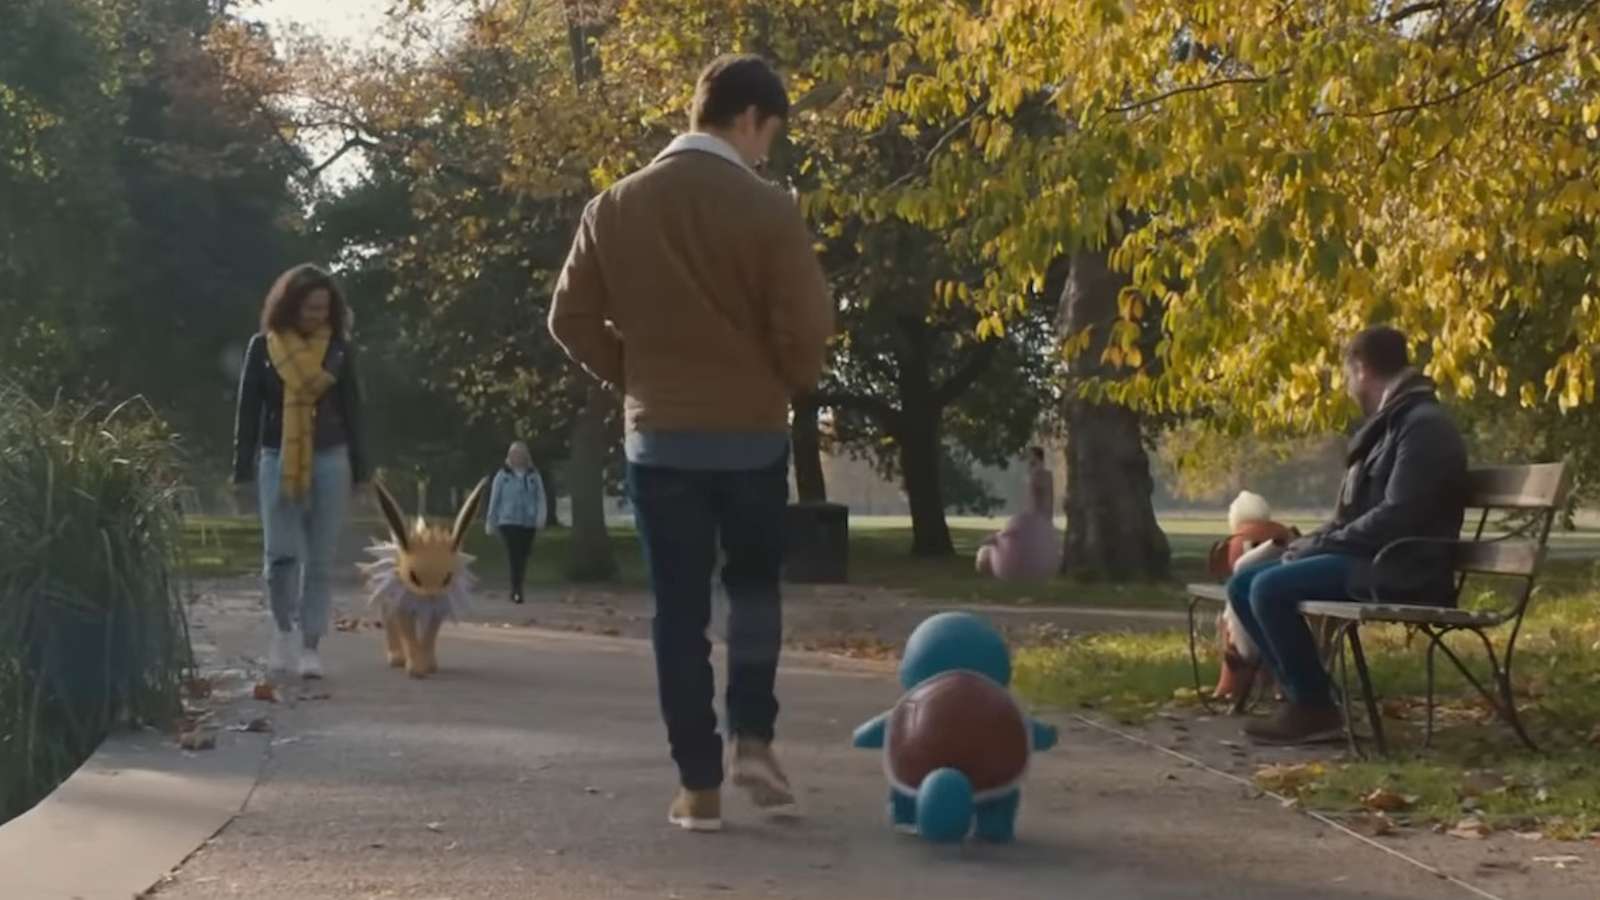 Pokemon Go walking with buddy pokemon in park.